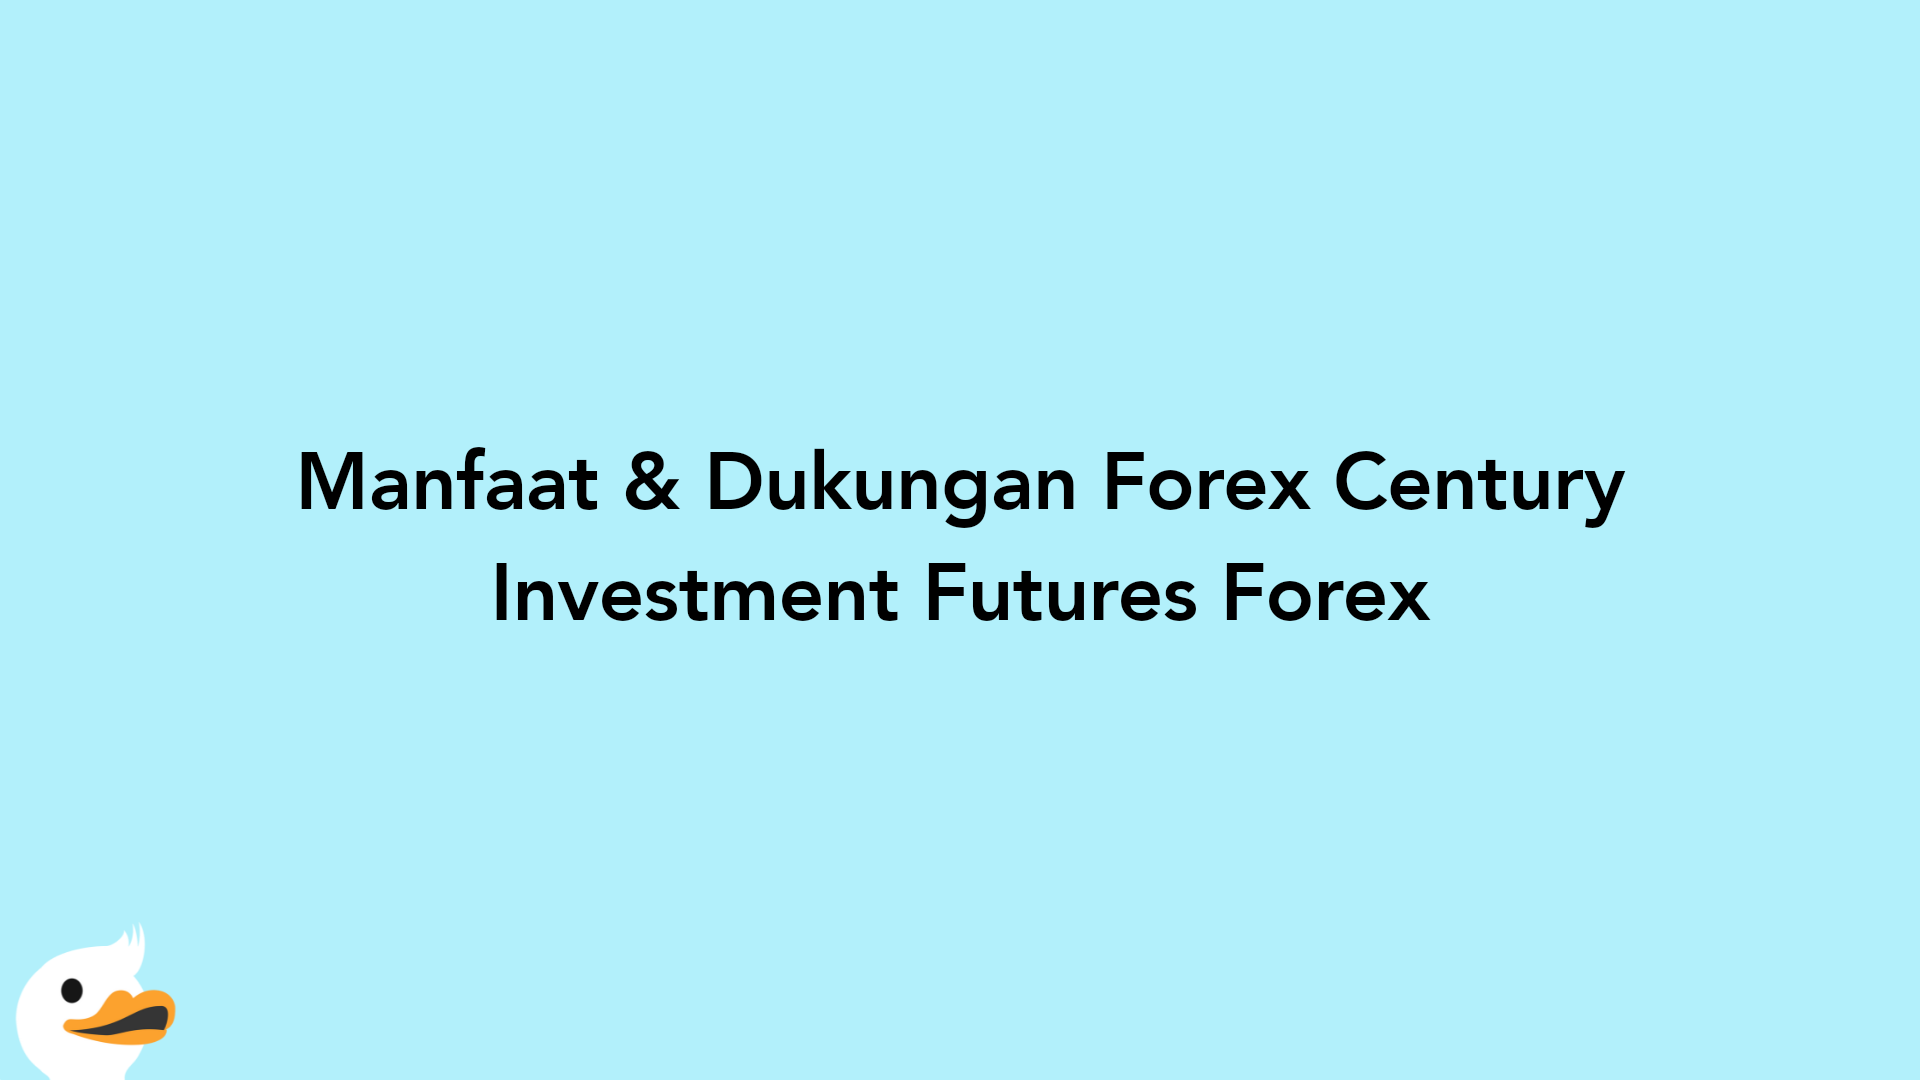 Manfaat & Dukungan Forex Century Investment Futures Forex